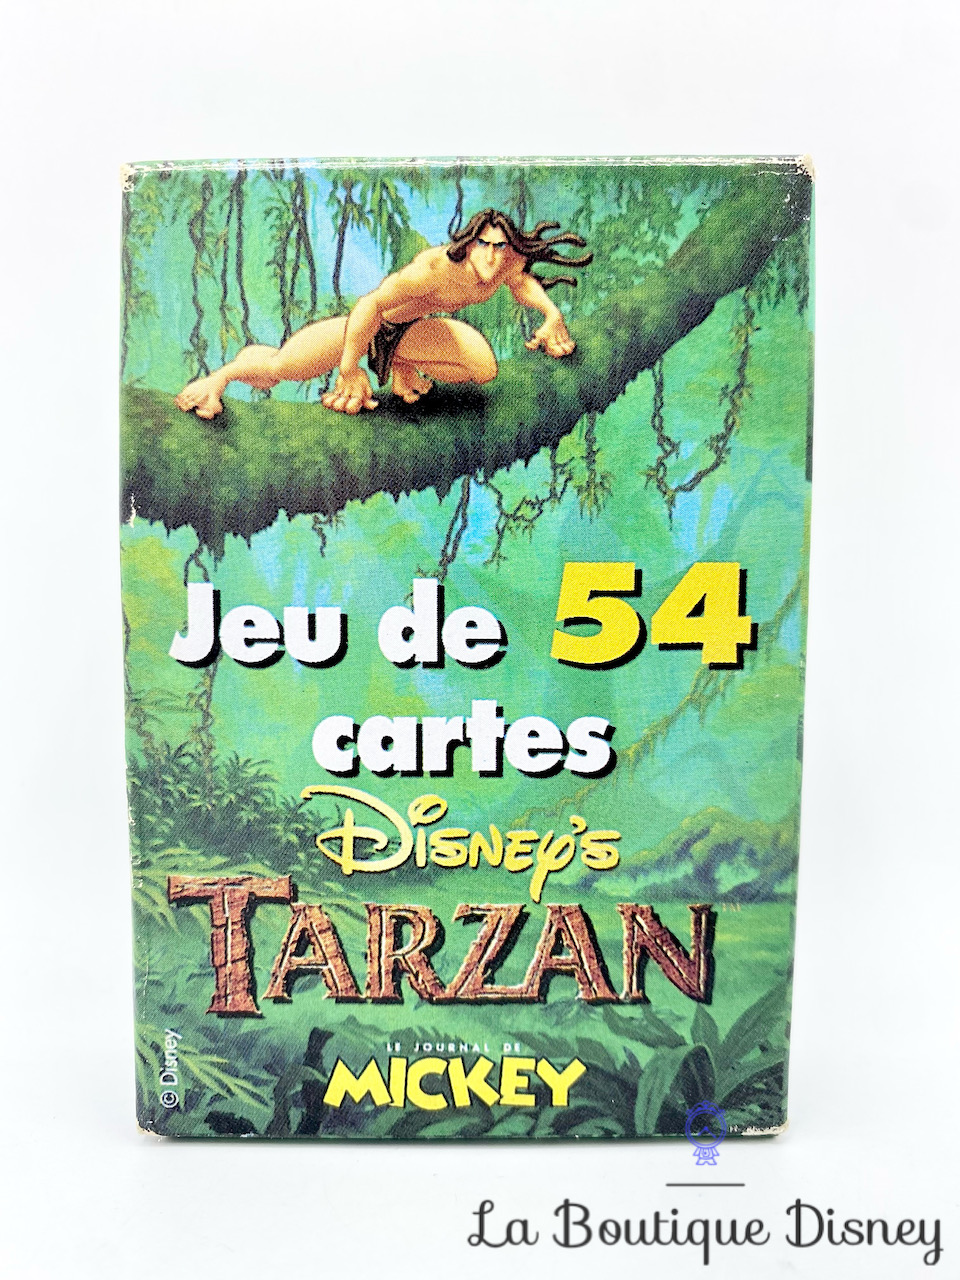 Jeu de 54 cartes Tarzan Disney Le journal de Mickey vintage